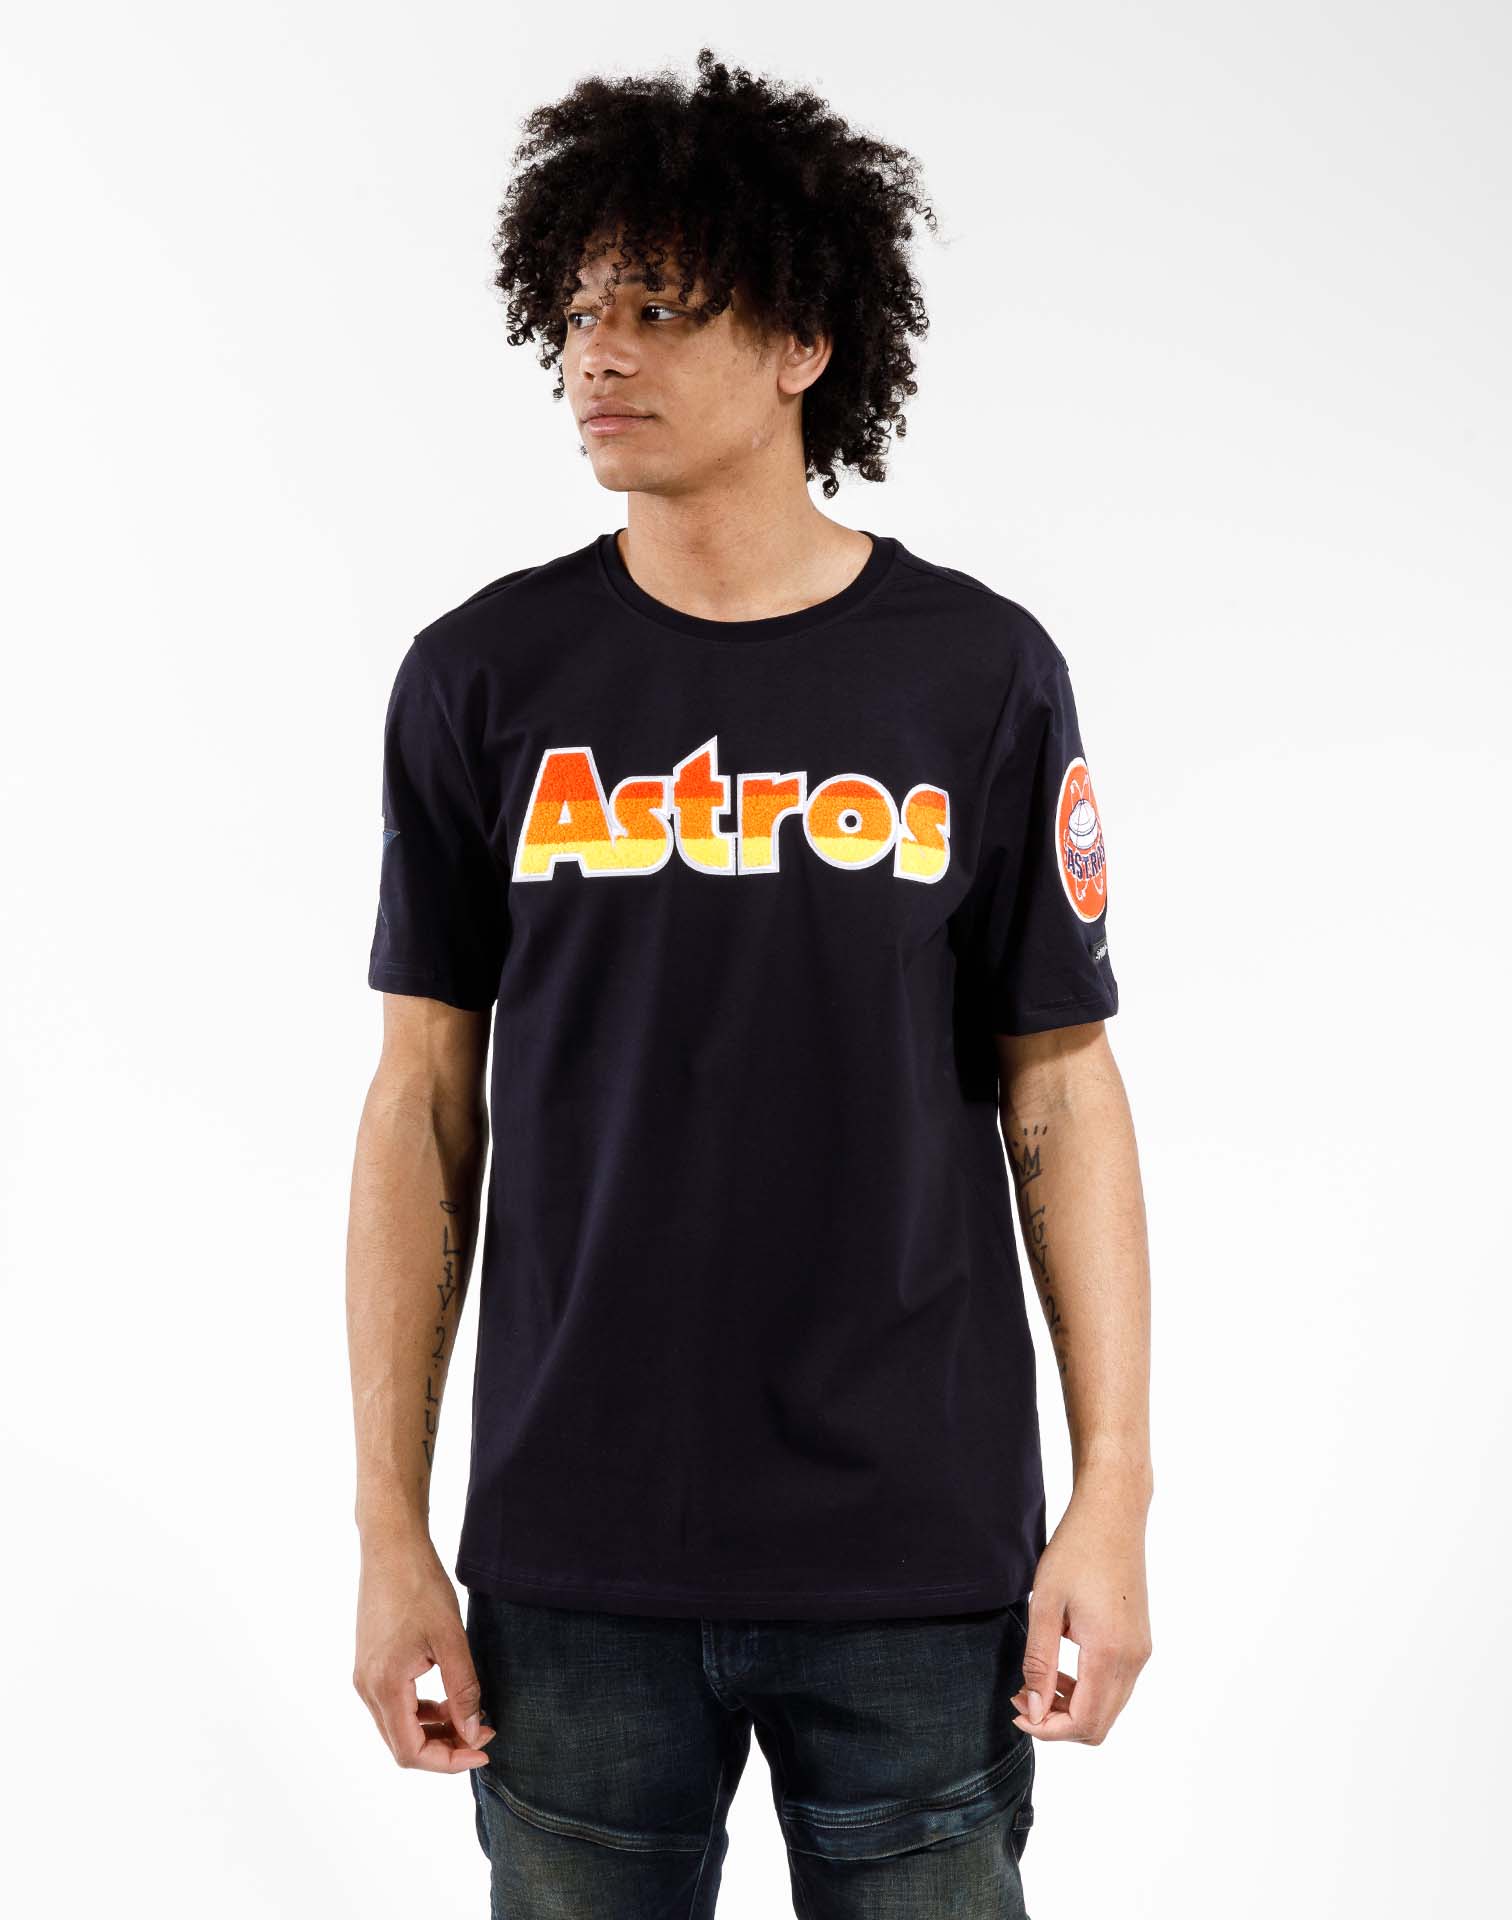 Houston Astros Hate Us T-Shirt/# Kiss My Astros Baseball Tee/ Astros Short  Sleeve Shirt/ Unisex Tee Shirt